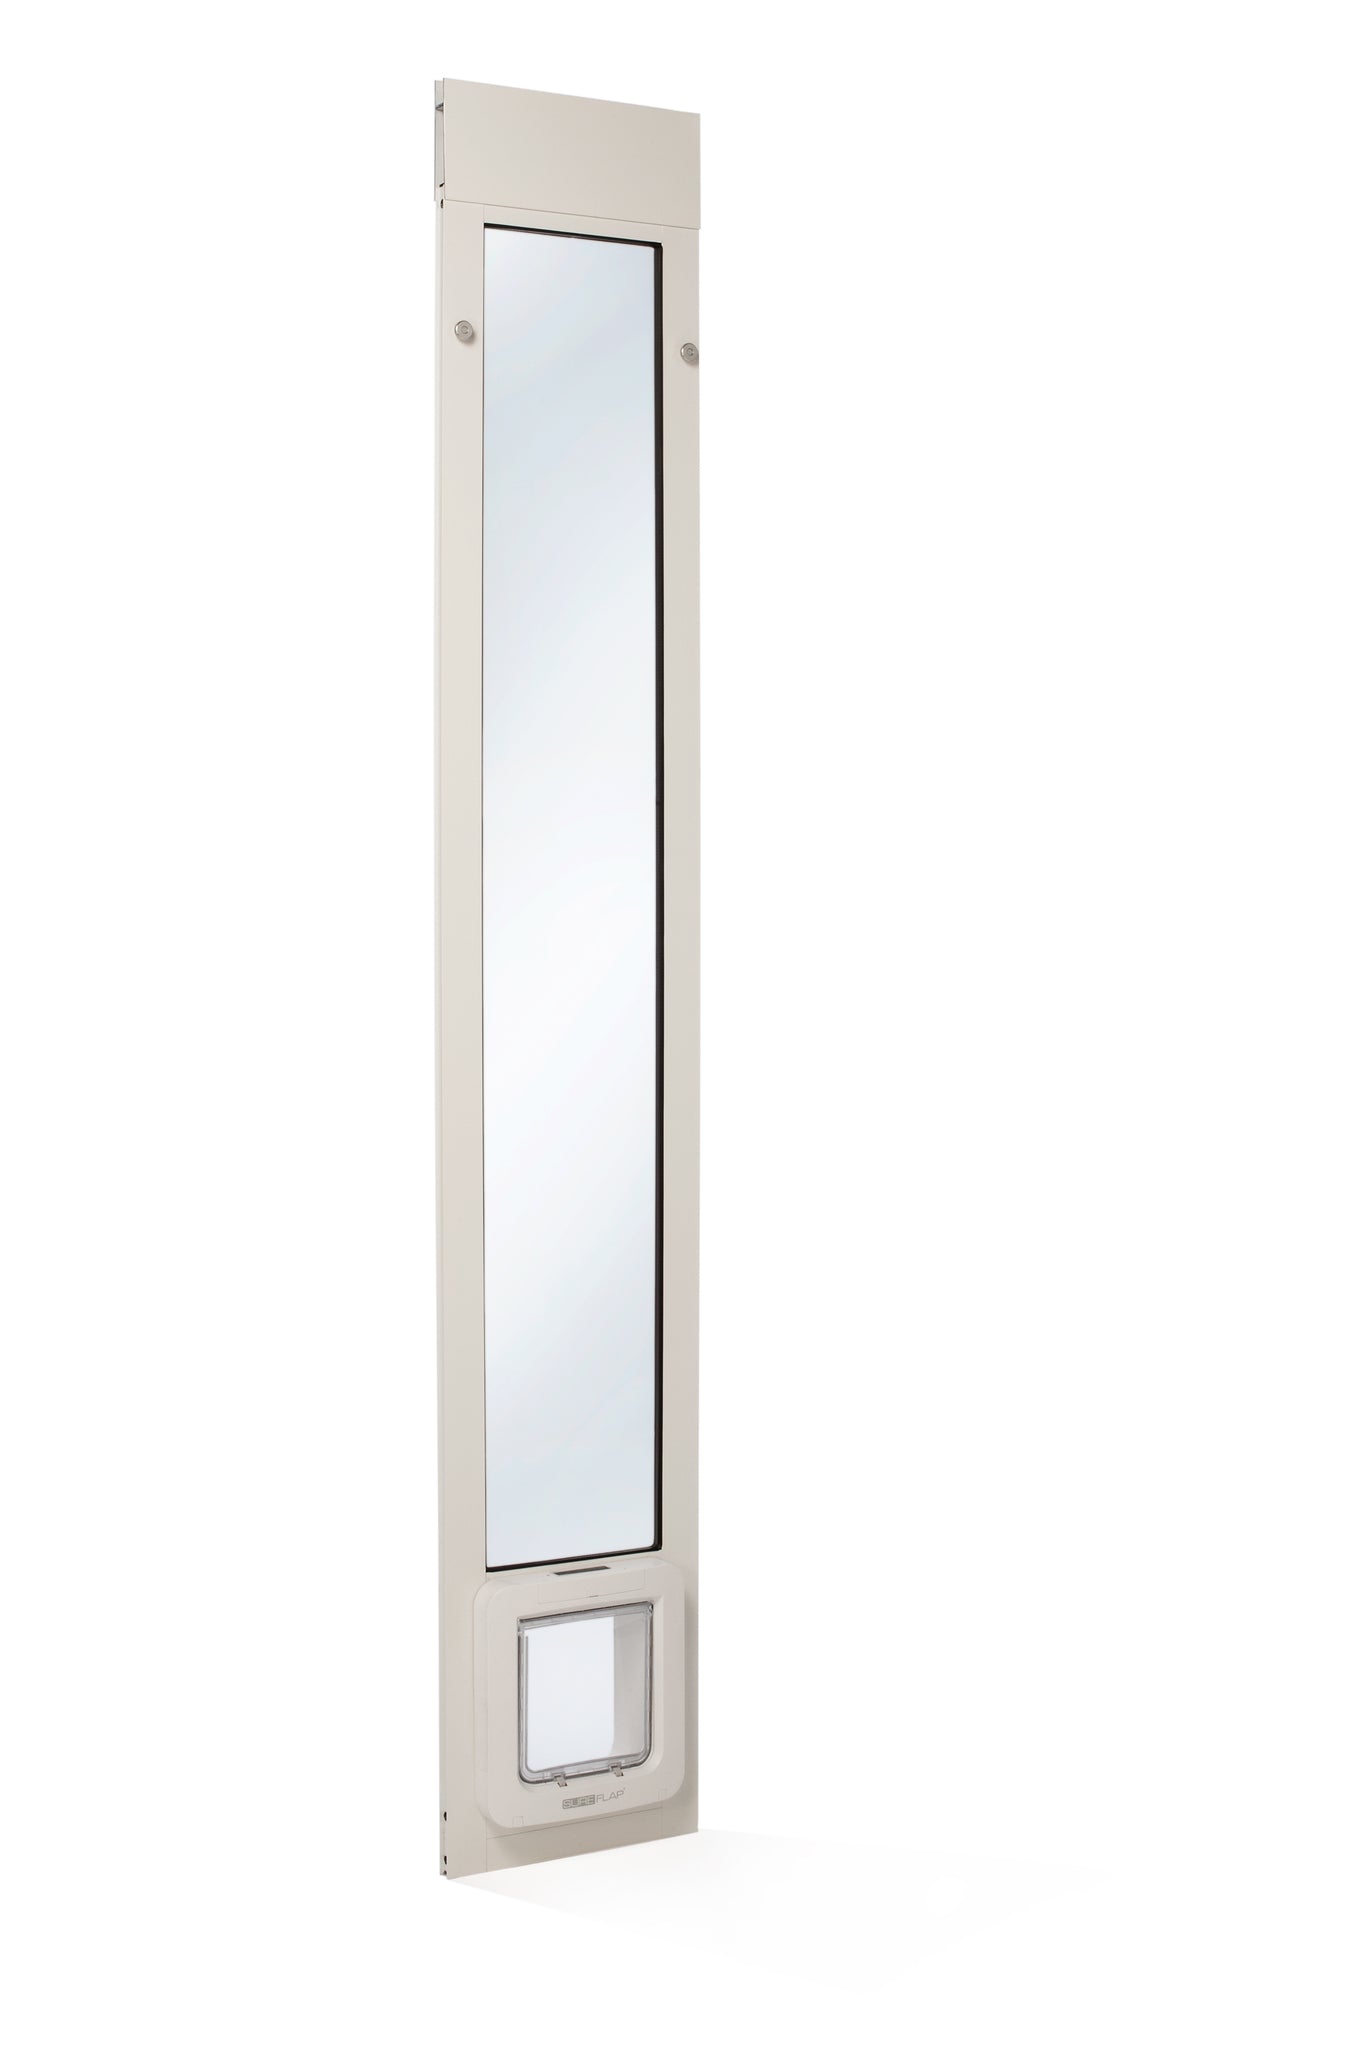 Sureflap Thermo Panel 2e Microchip Door Sliding Glass